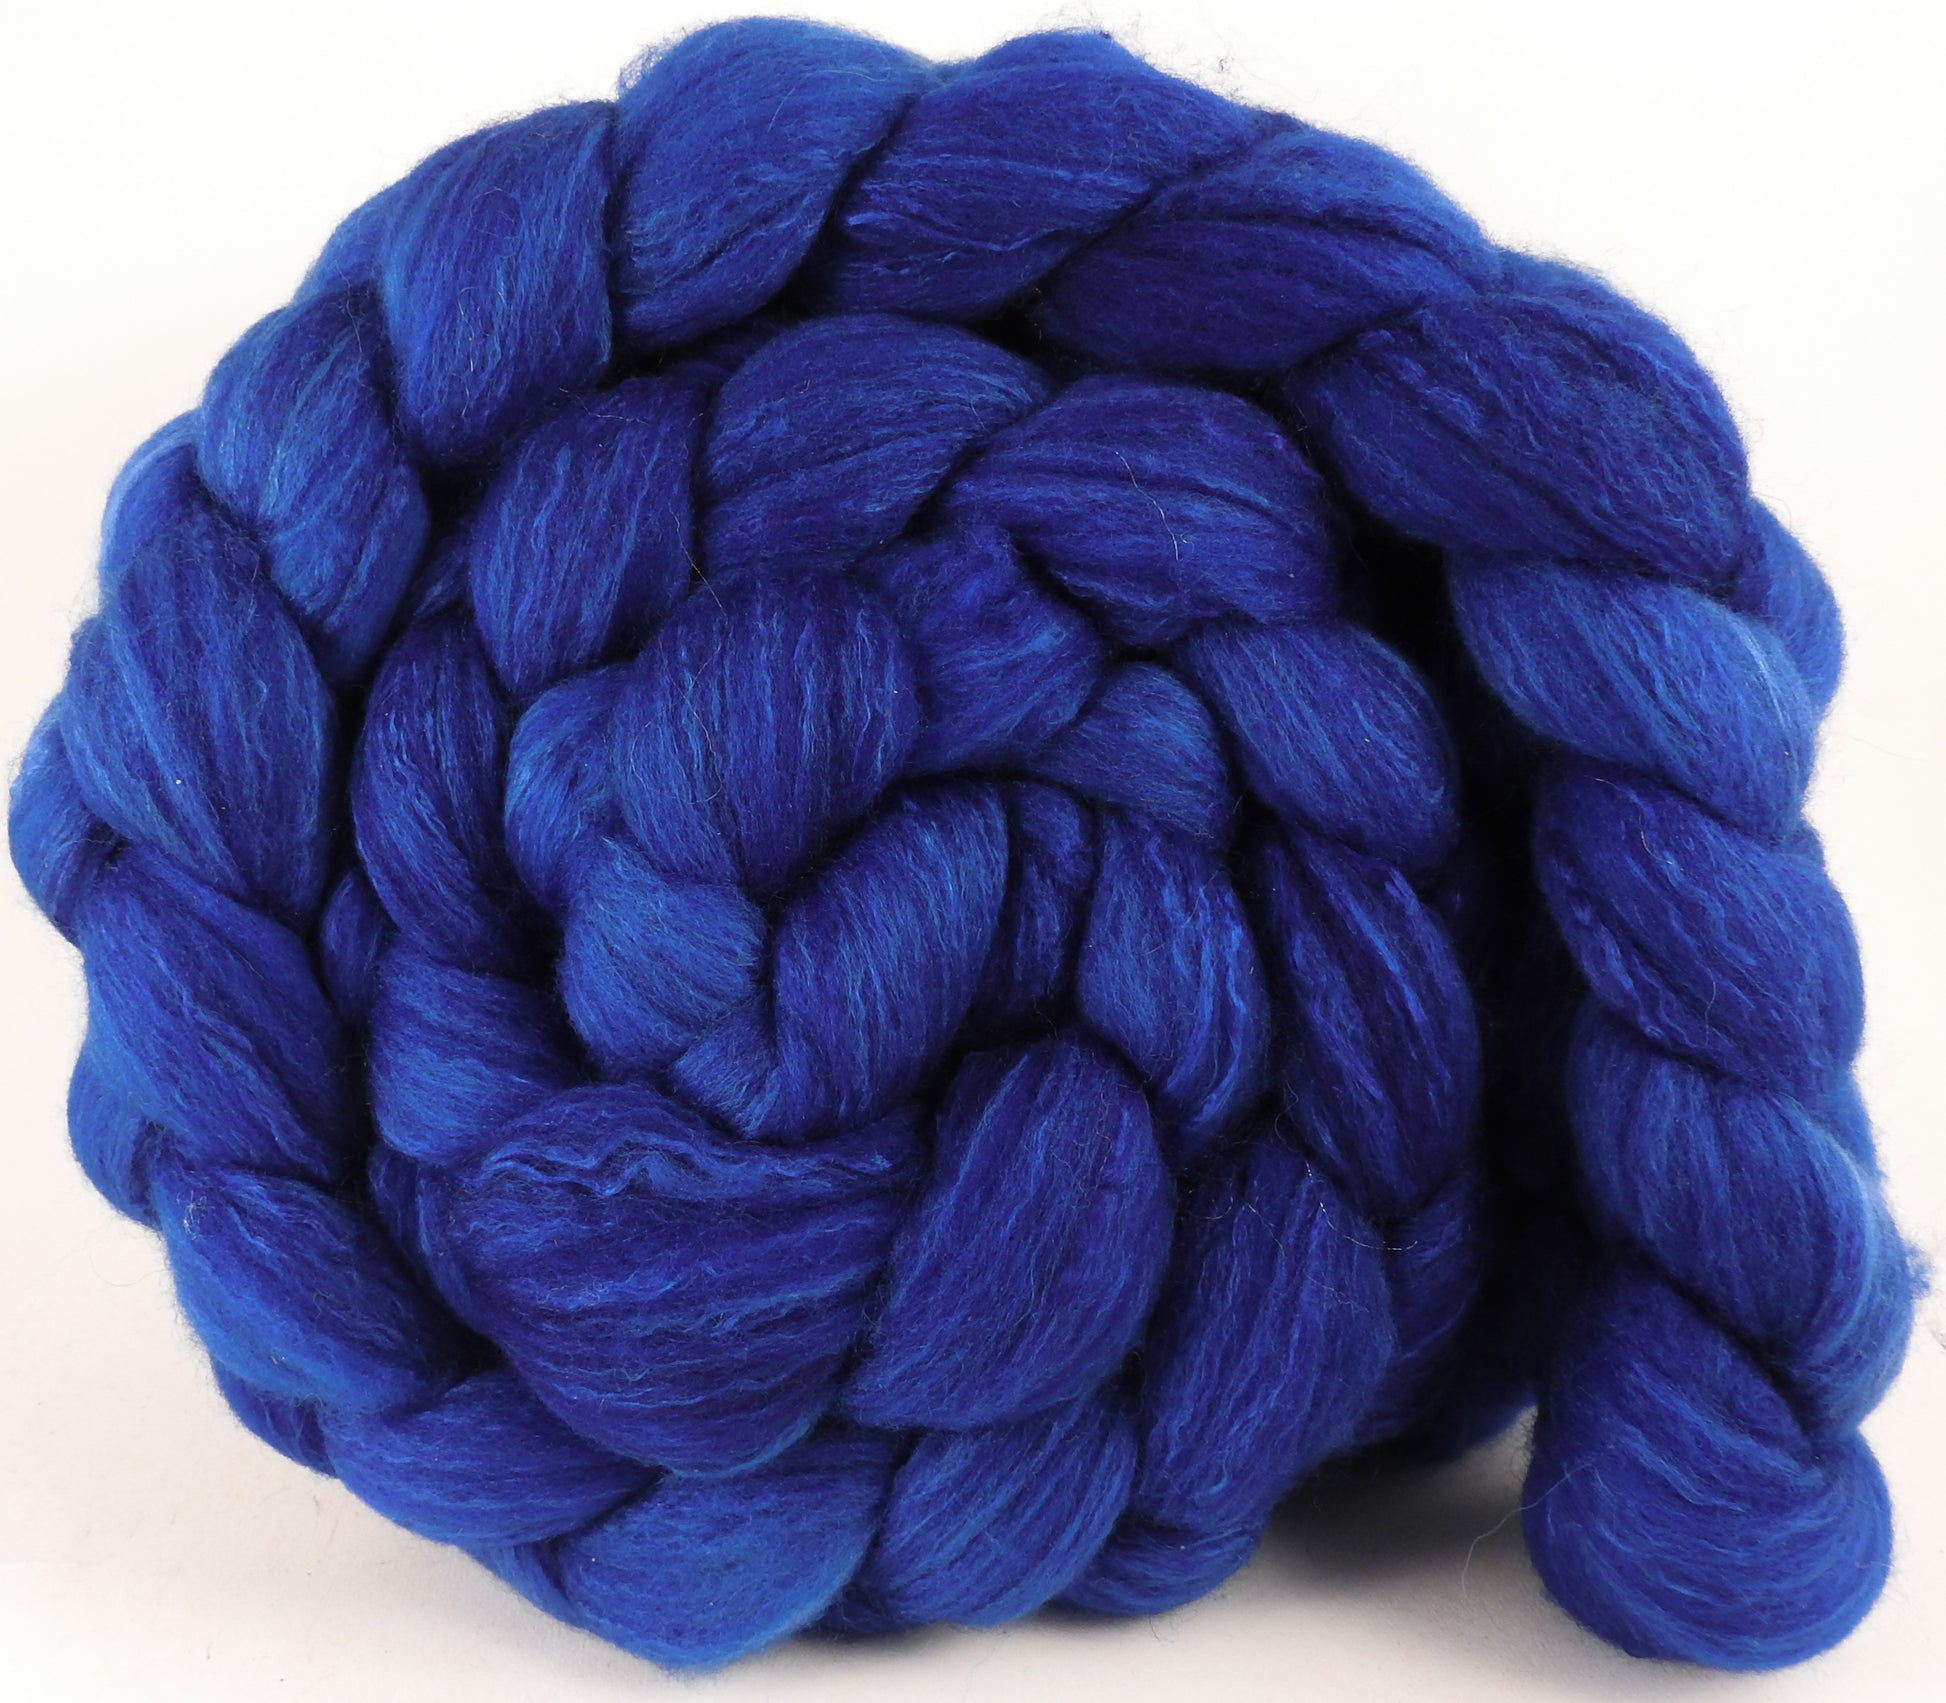 Hand dyed top for spinning - Scilla - (5.4 oz) Organic Polwarth / Tussah silk (80/20) - Inglenook Fibers